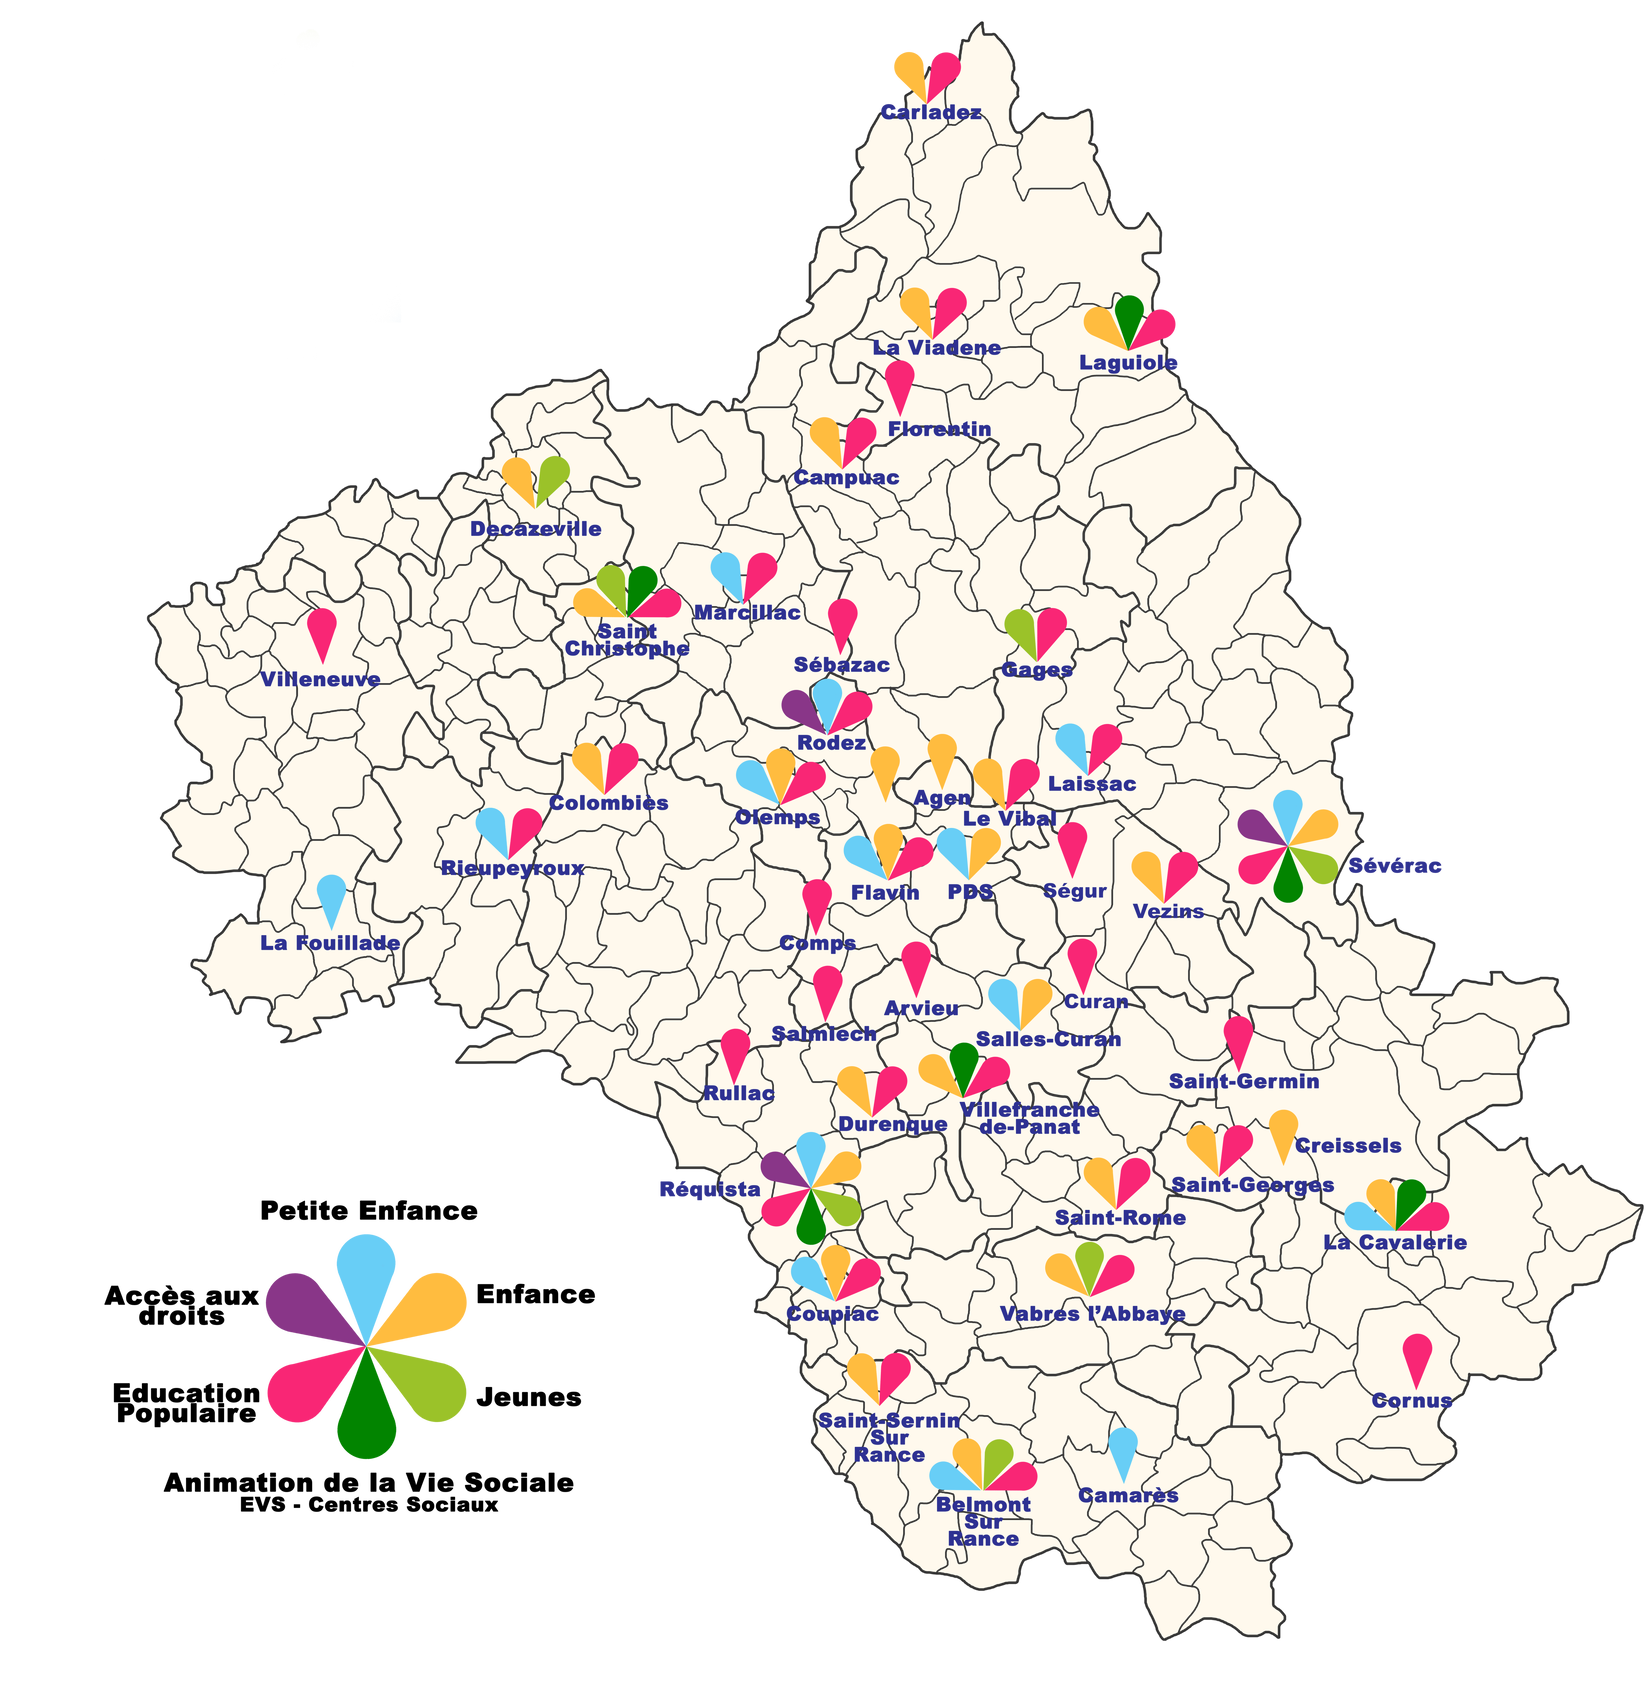 Familles Rurales Aveyron